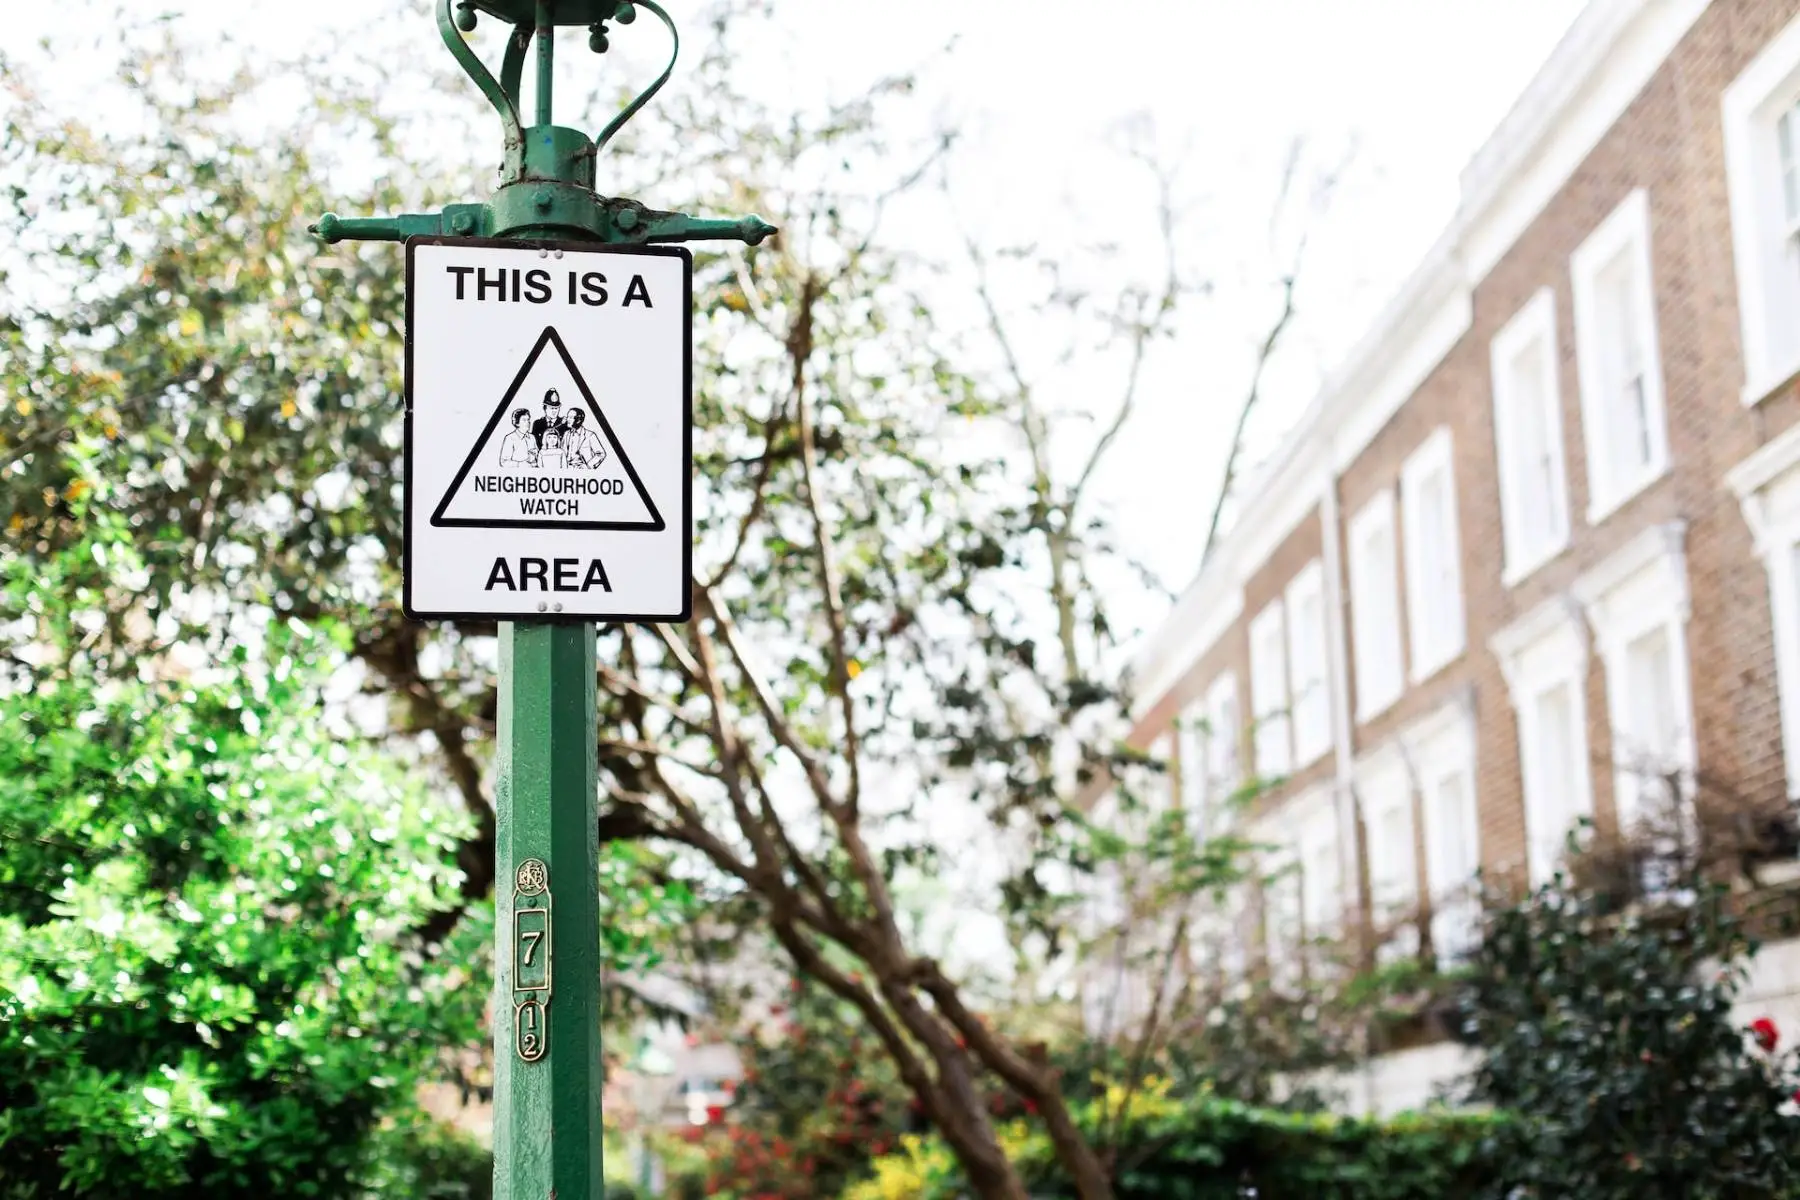 Neighborhood watch sign in London